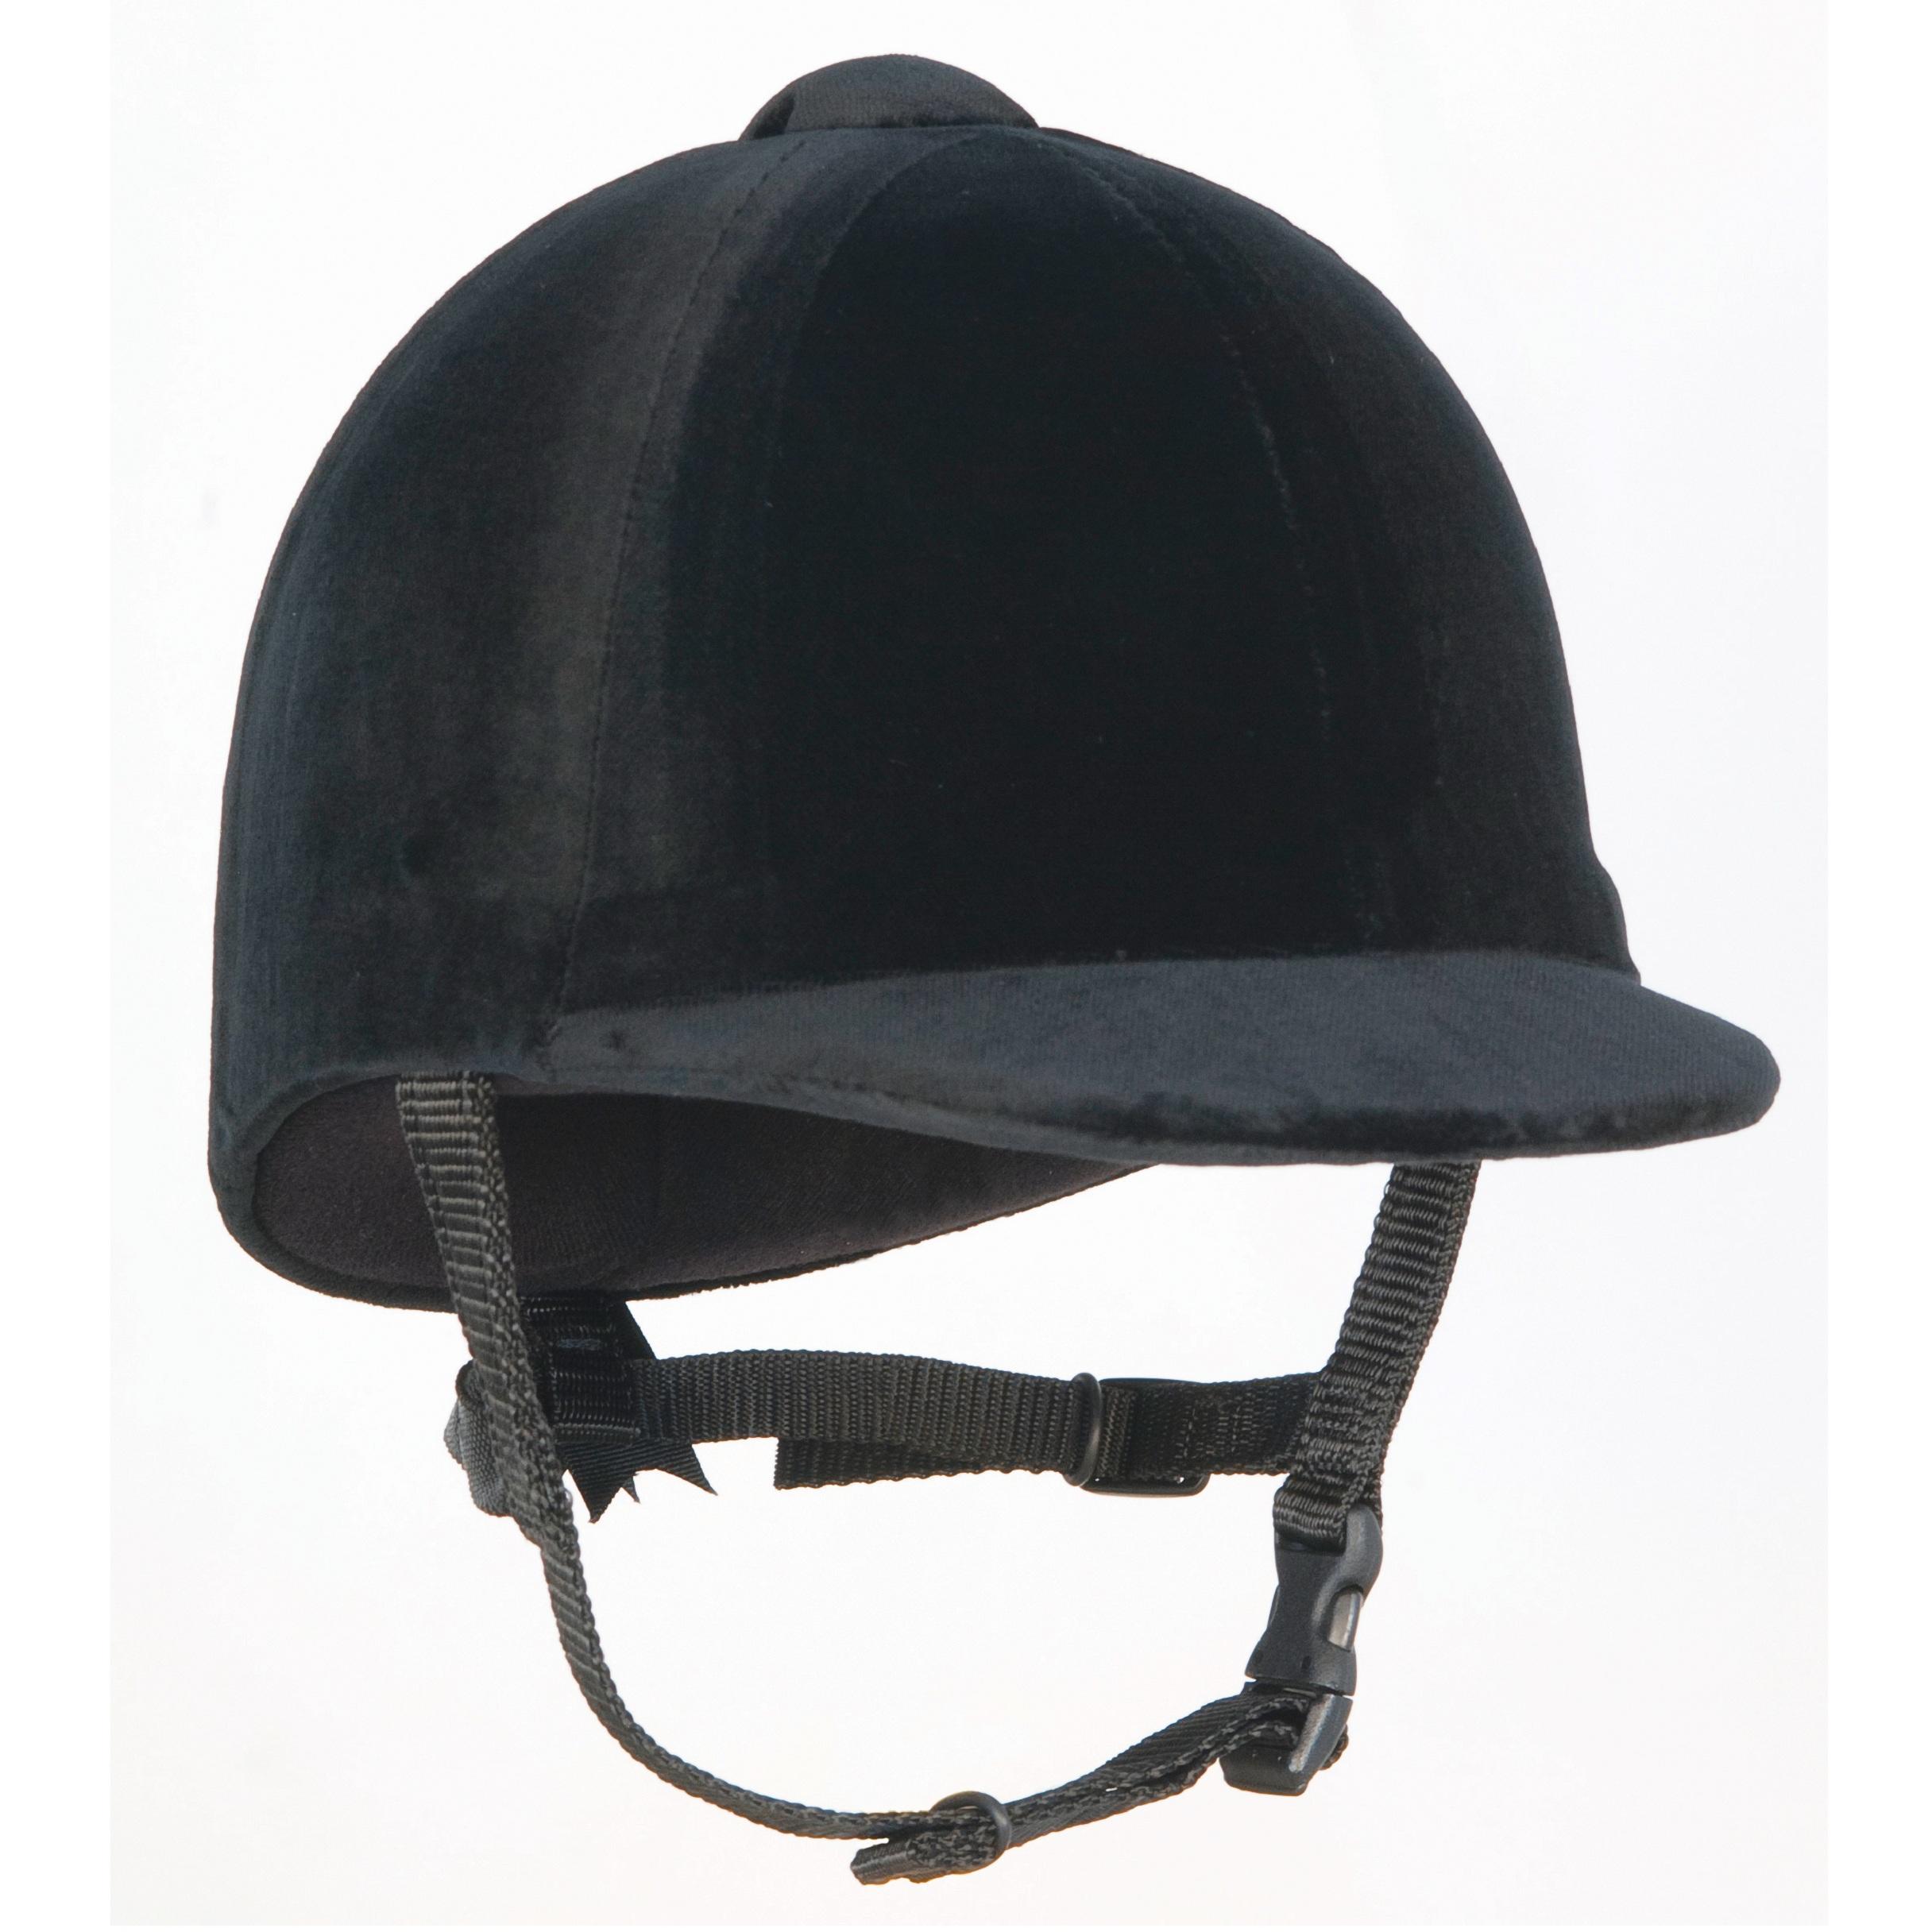 CPX-3000 Junior Riding Hat Black 1/2